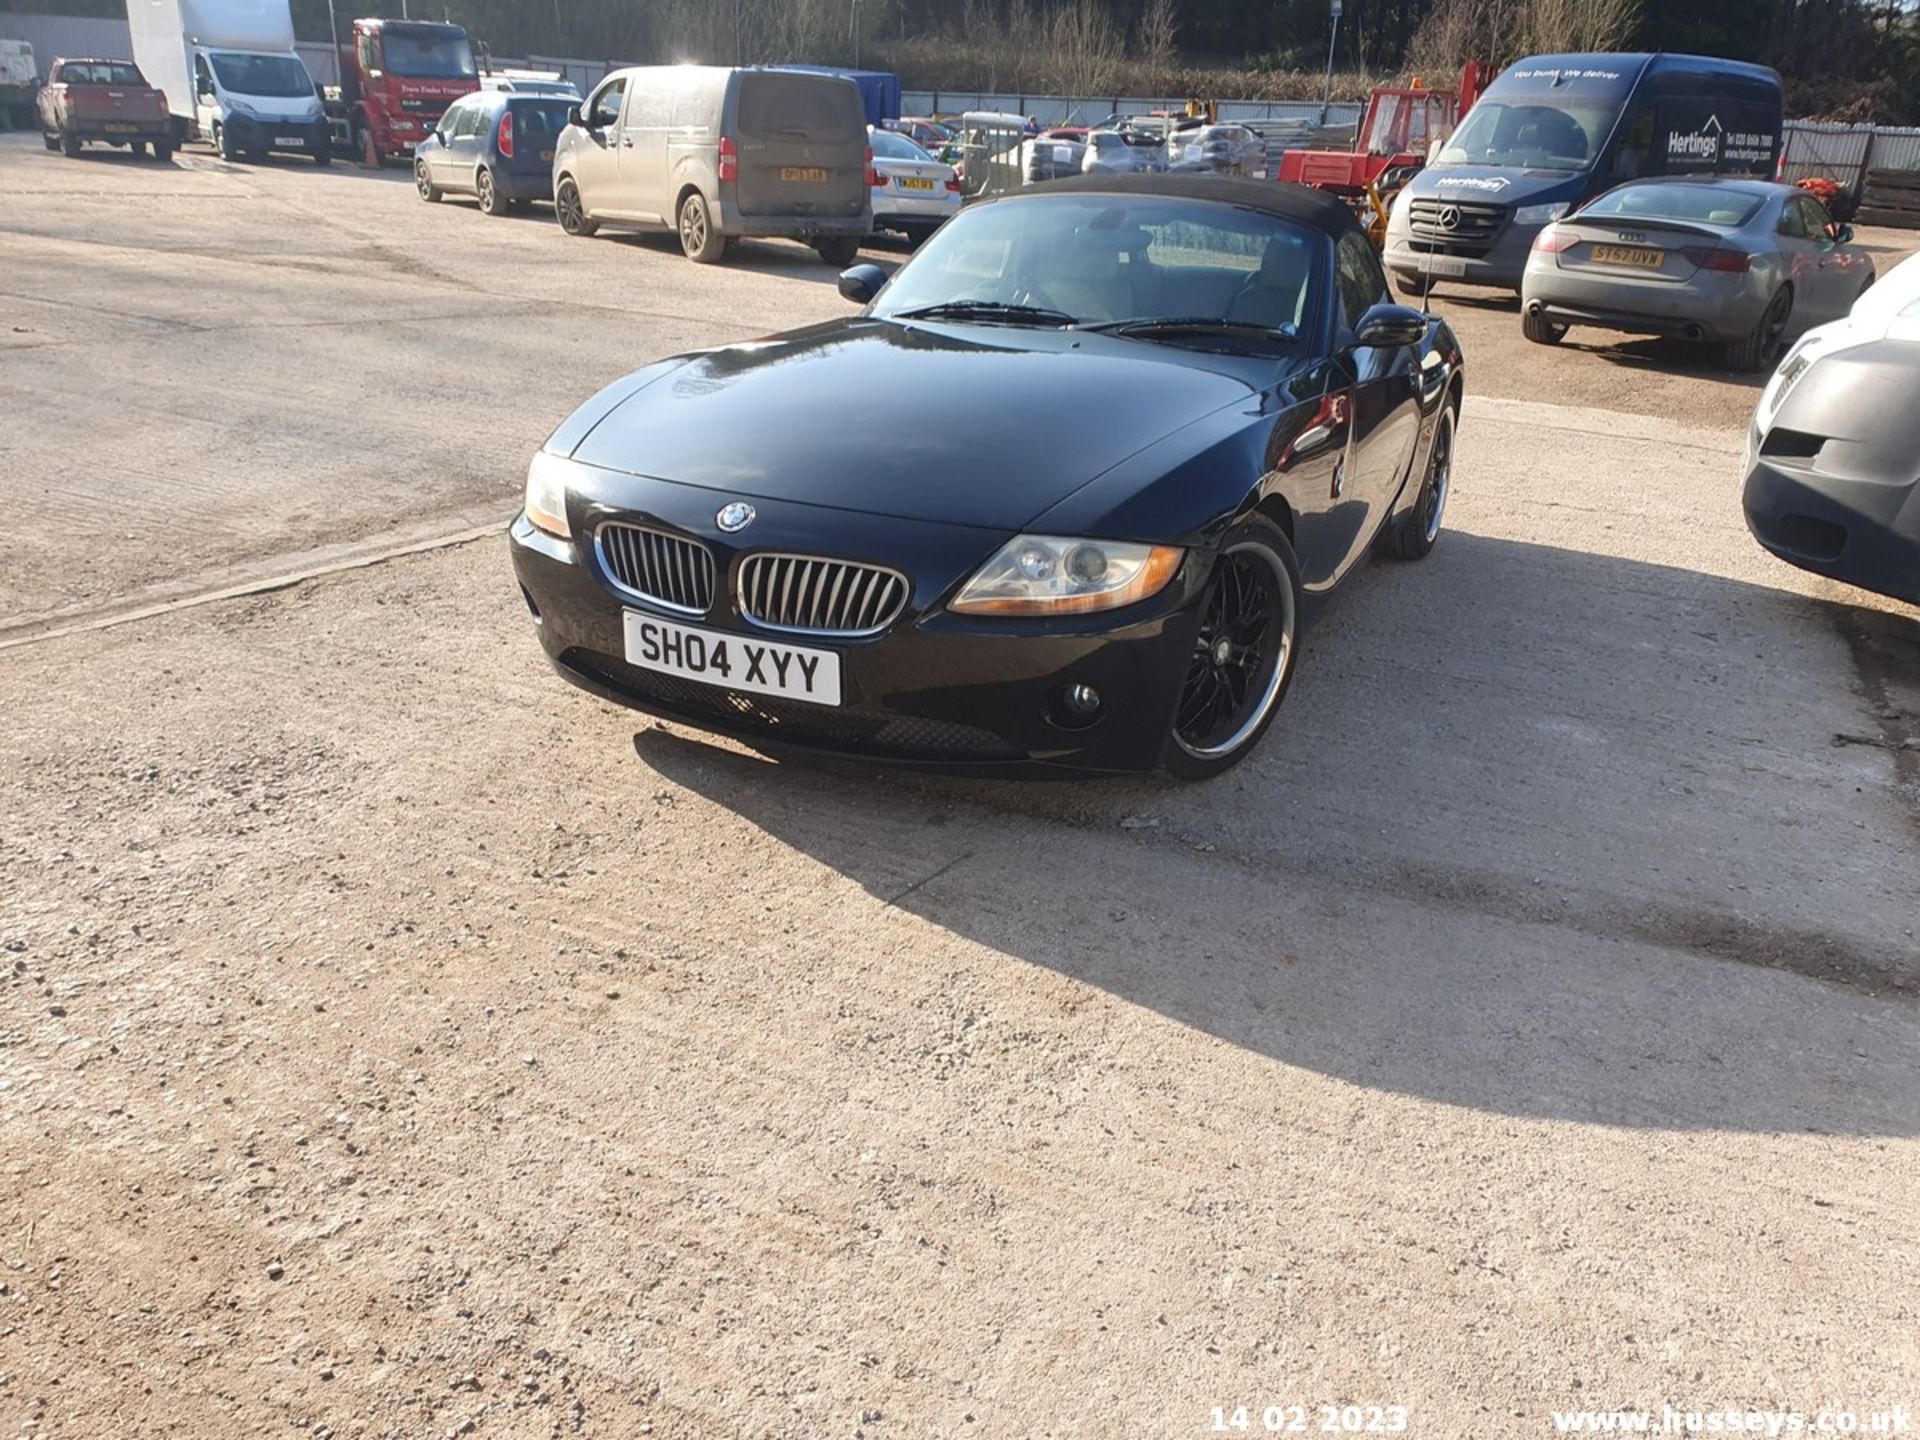 04/04 BMW Z4 3.0I SE - 2979cc 2dr Convertible (Black, 69k) - Image 26 of 44